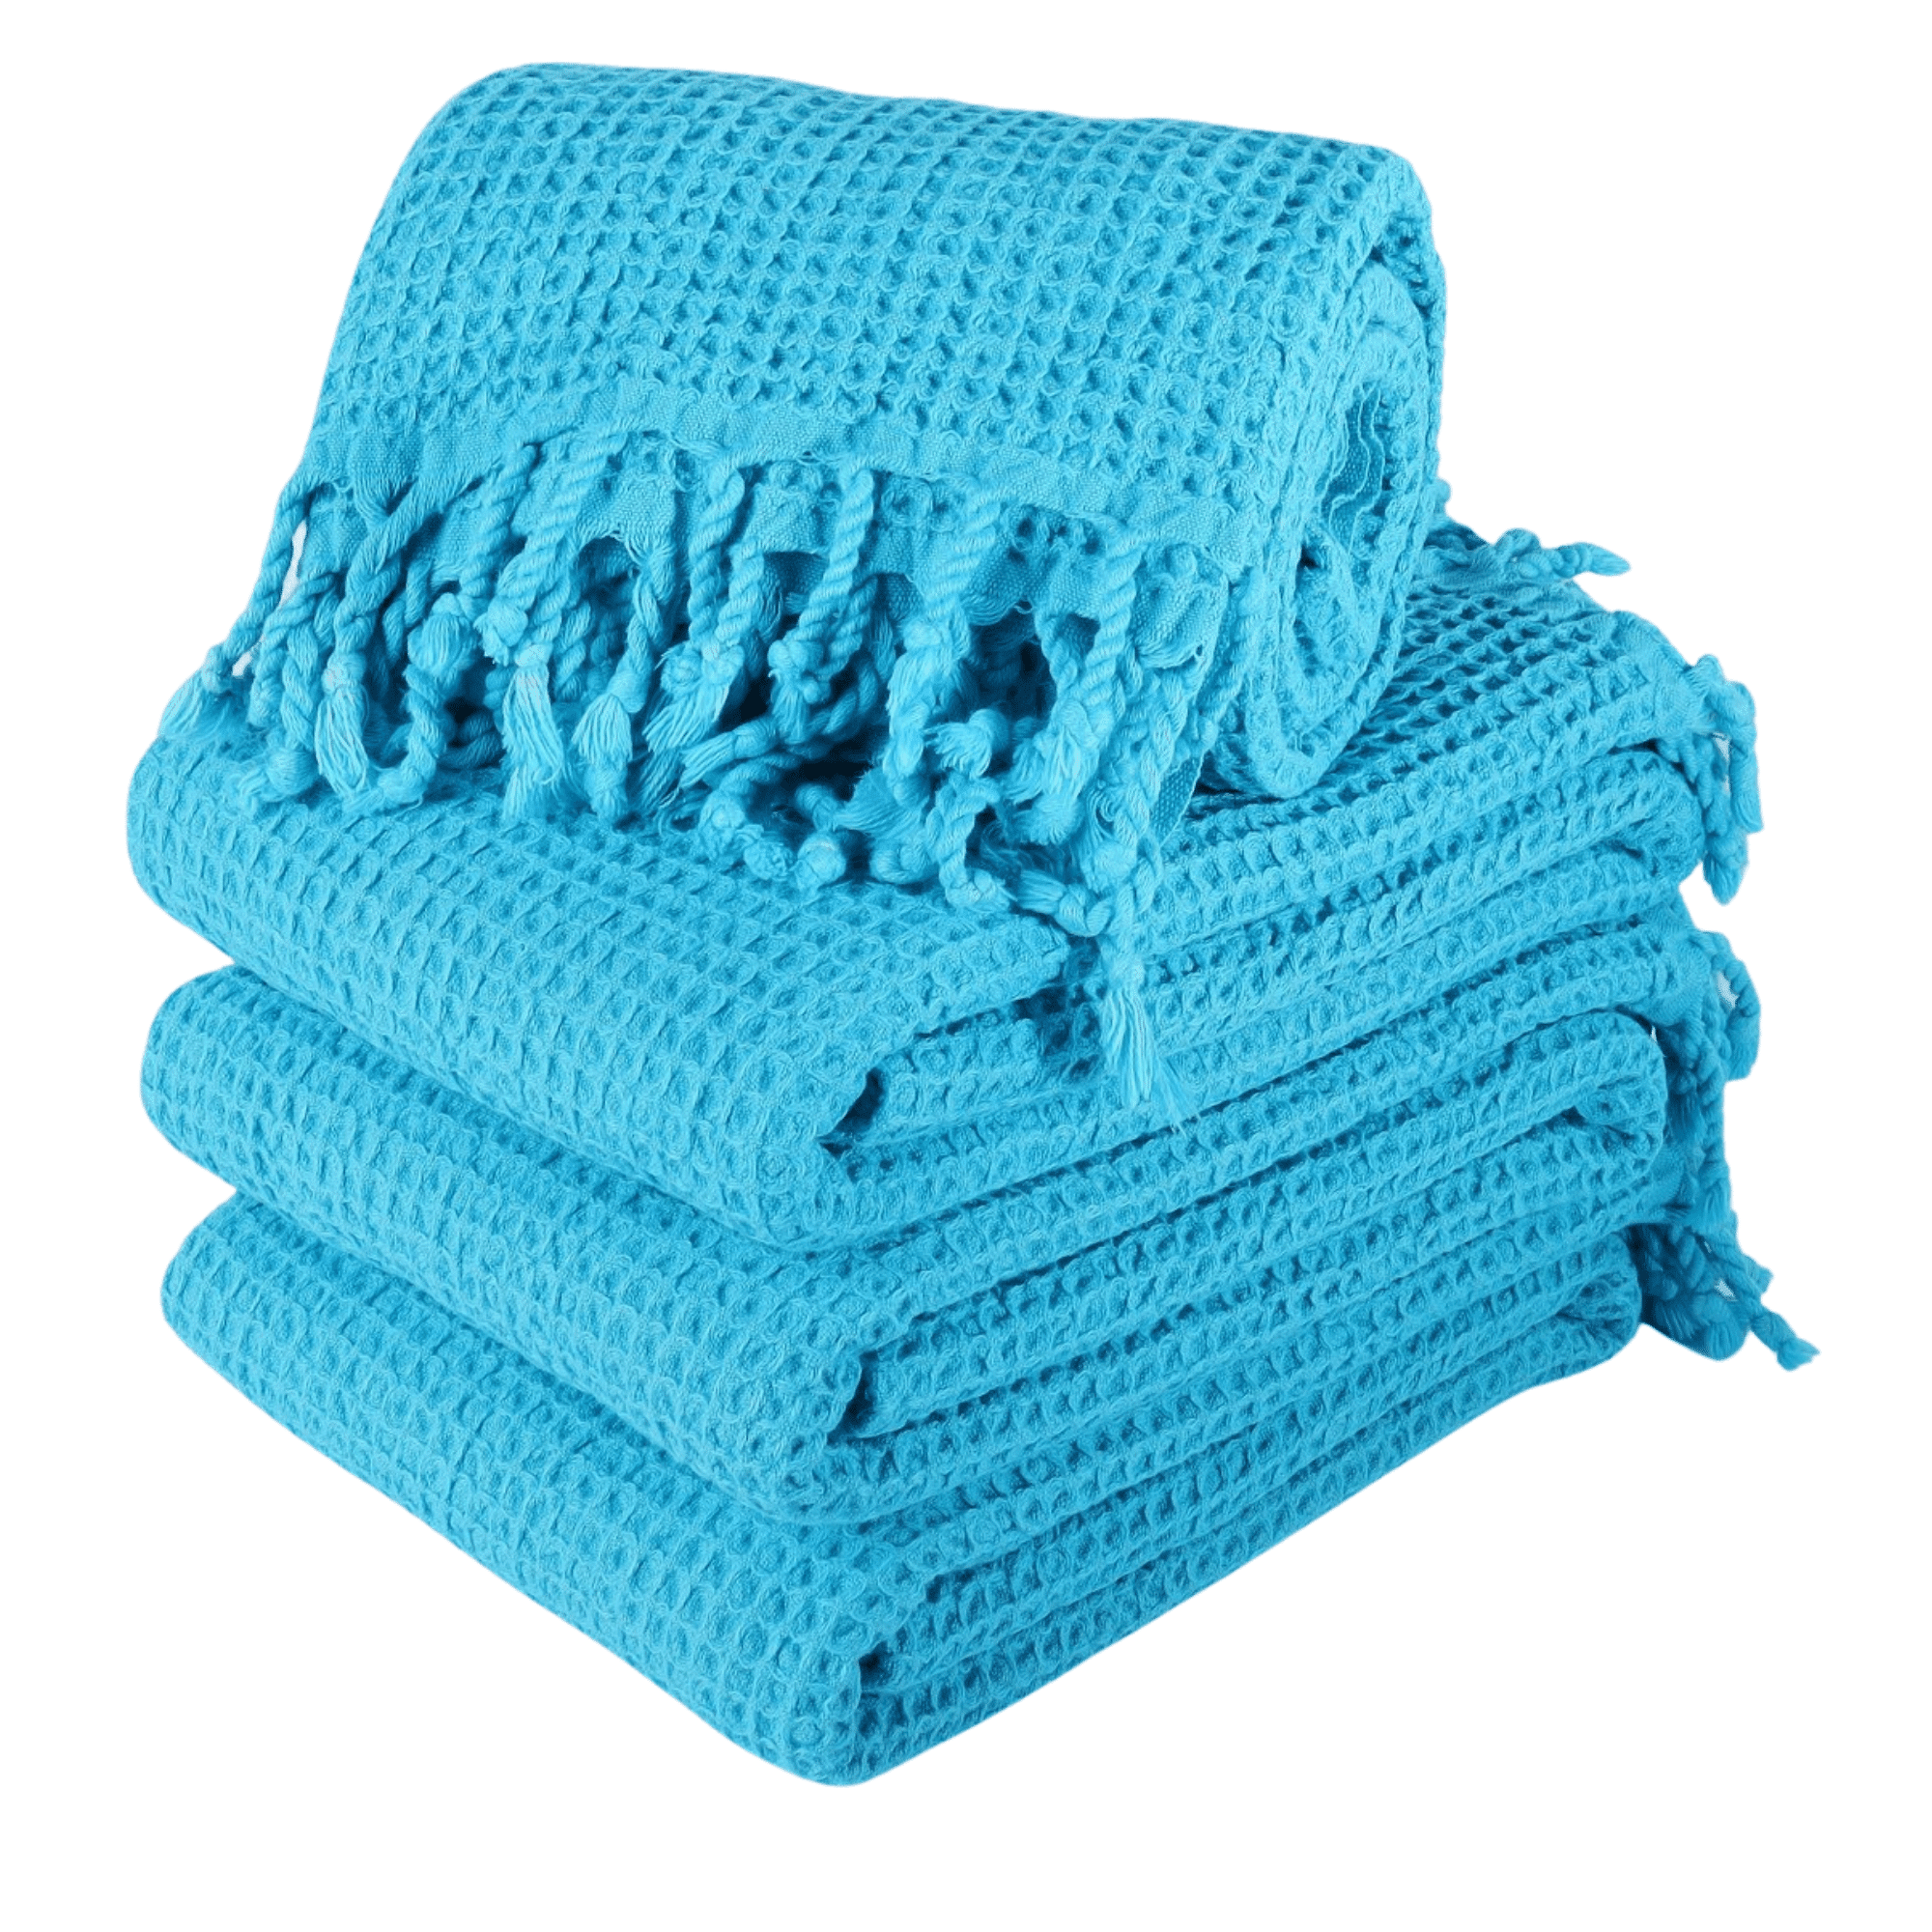 Waffle Beach Towel, Turkish Cotton Waffle Weave Towel, Turkish Waffle Towel, Waffle Textured Towel, Handmade, with Tassel, Soft, Thin, Quick Dry Beach Towel (Turquoise)